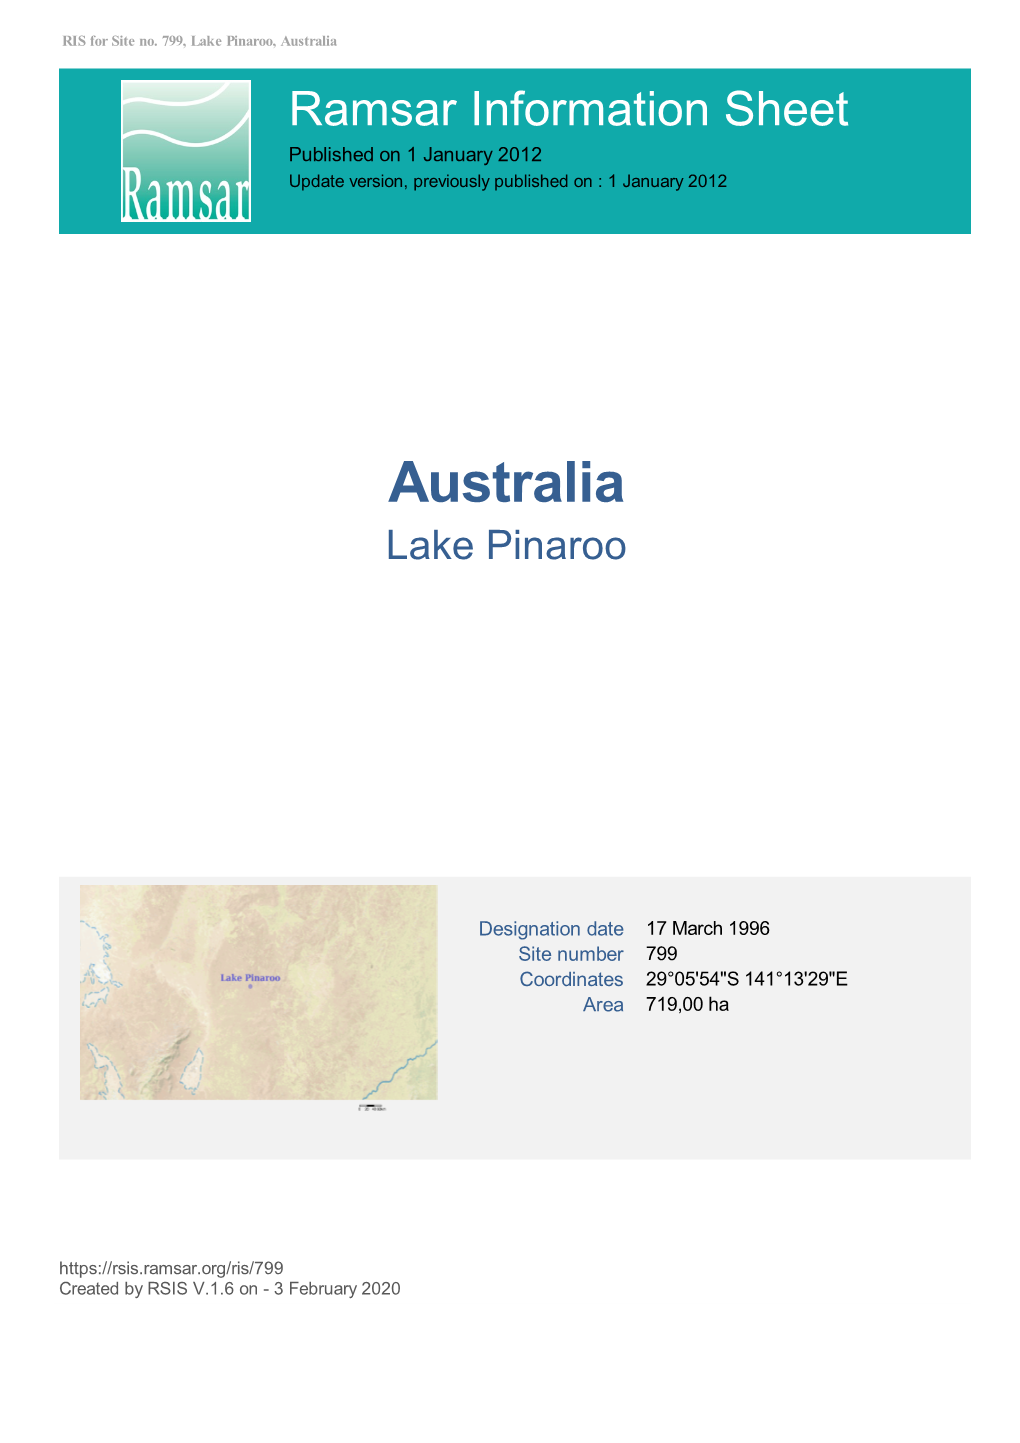 Lake Pinaroo Ramsar Information Sheet, January 1998